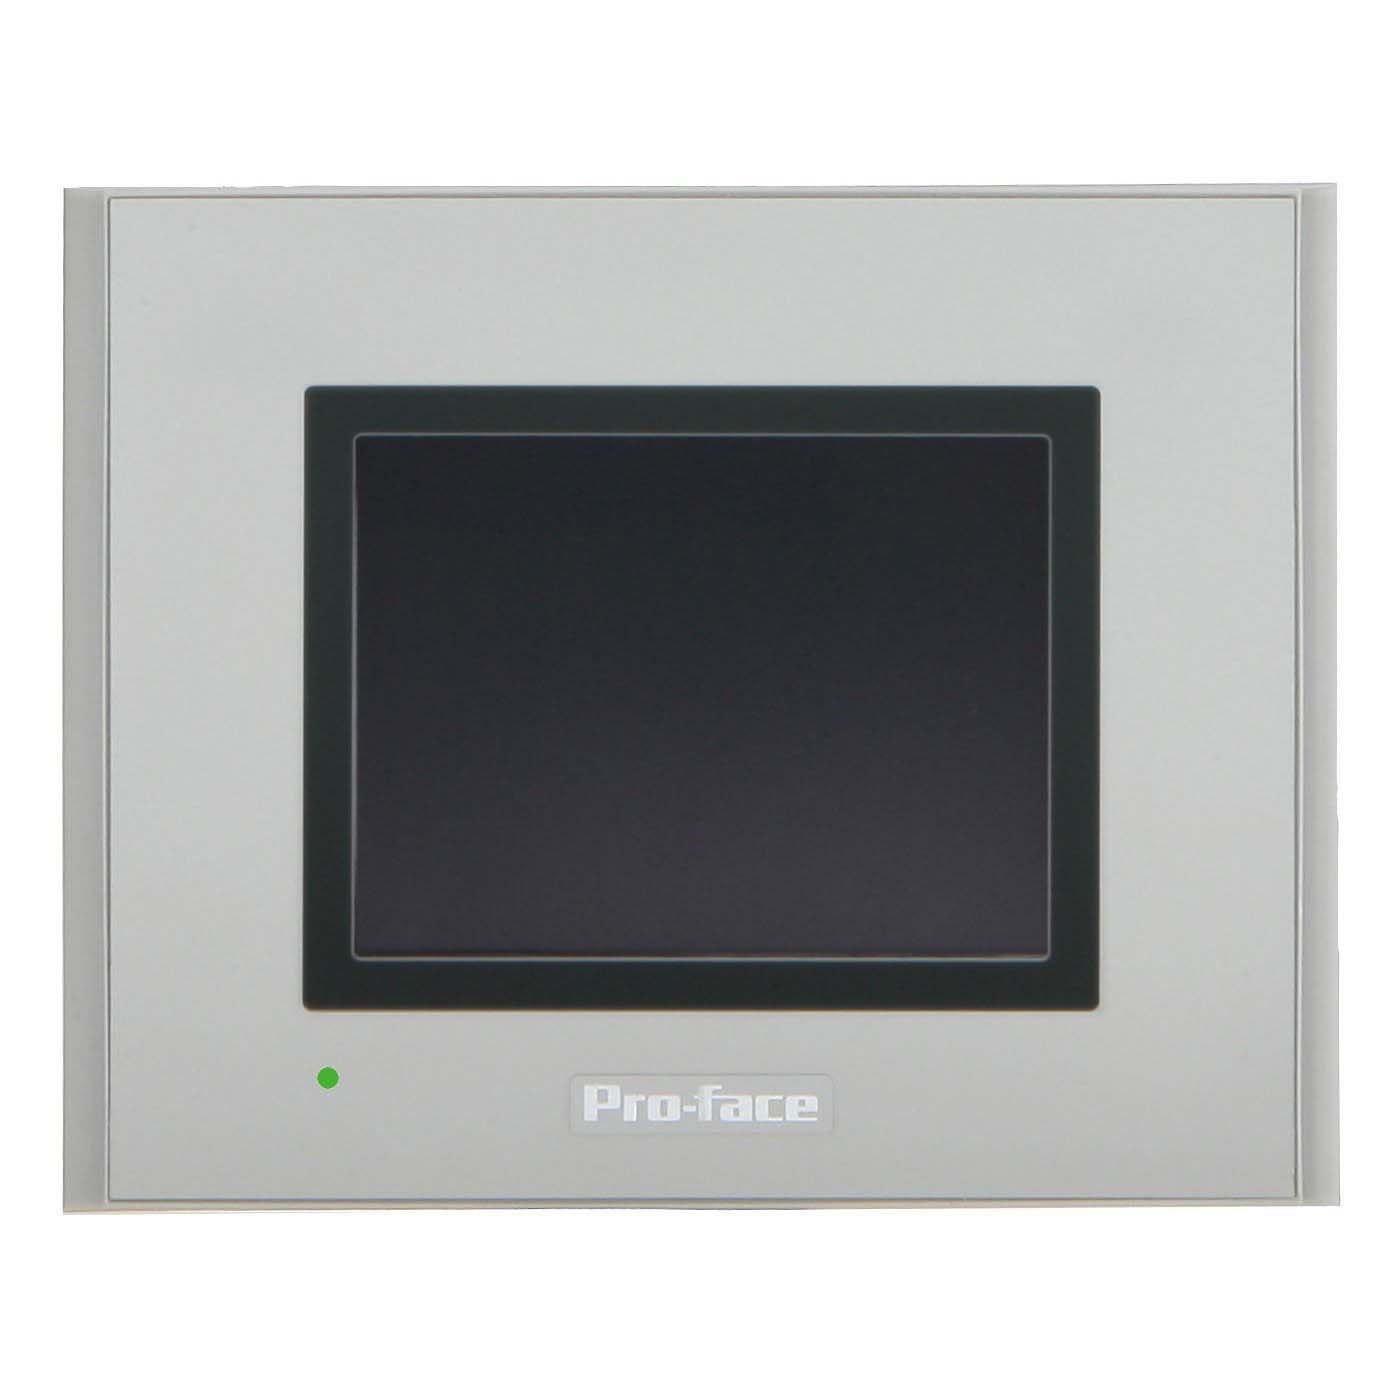 Pro-face GP4000 Farb TFT LCD HMI-Touchscreen, 800 x 480pixels, 218 x 60 x 173 mm